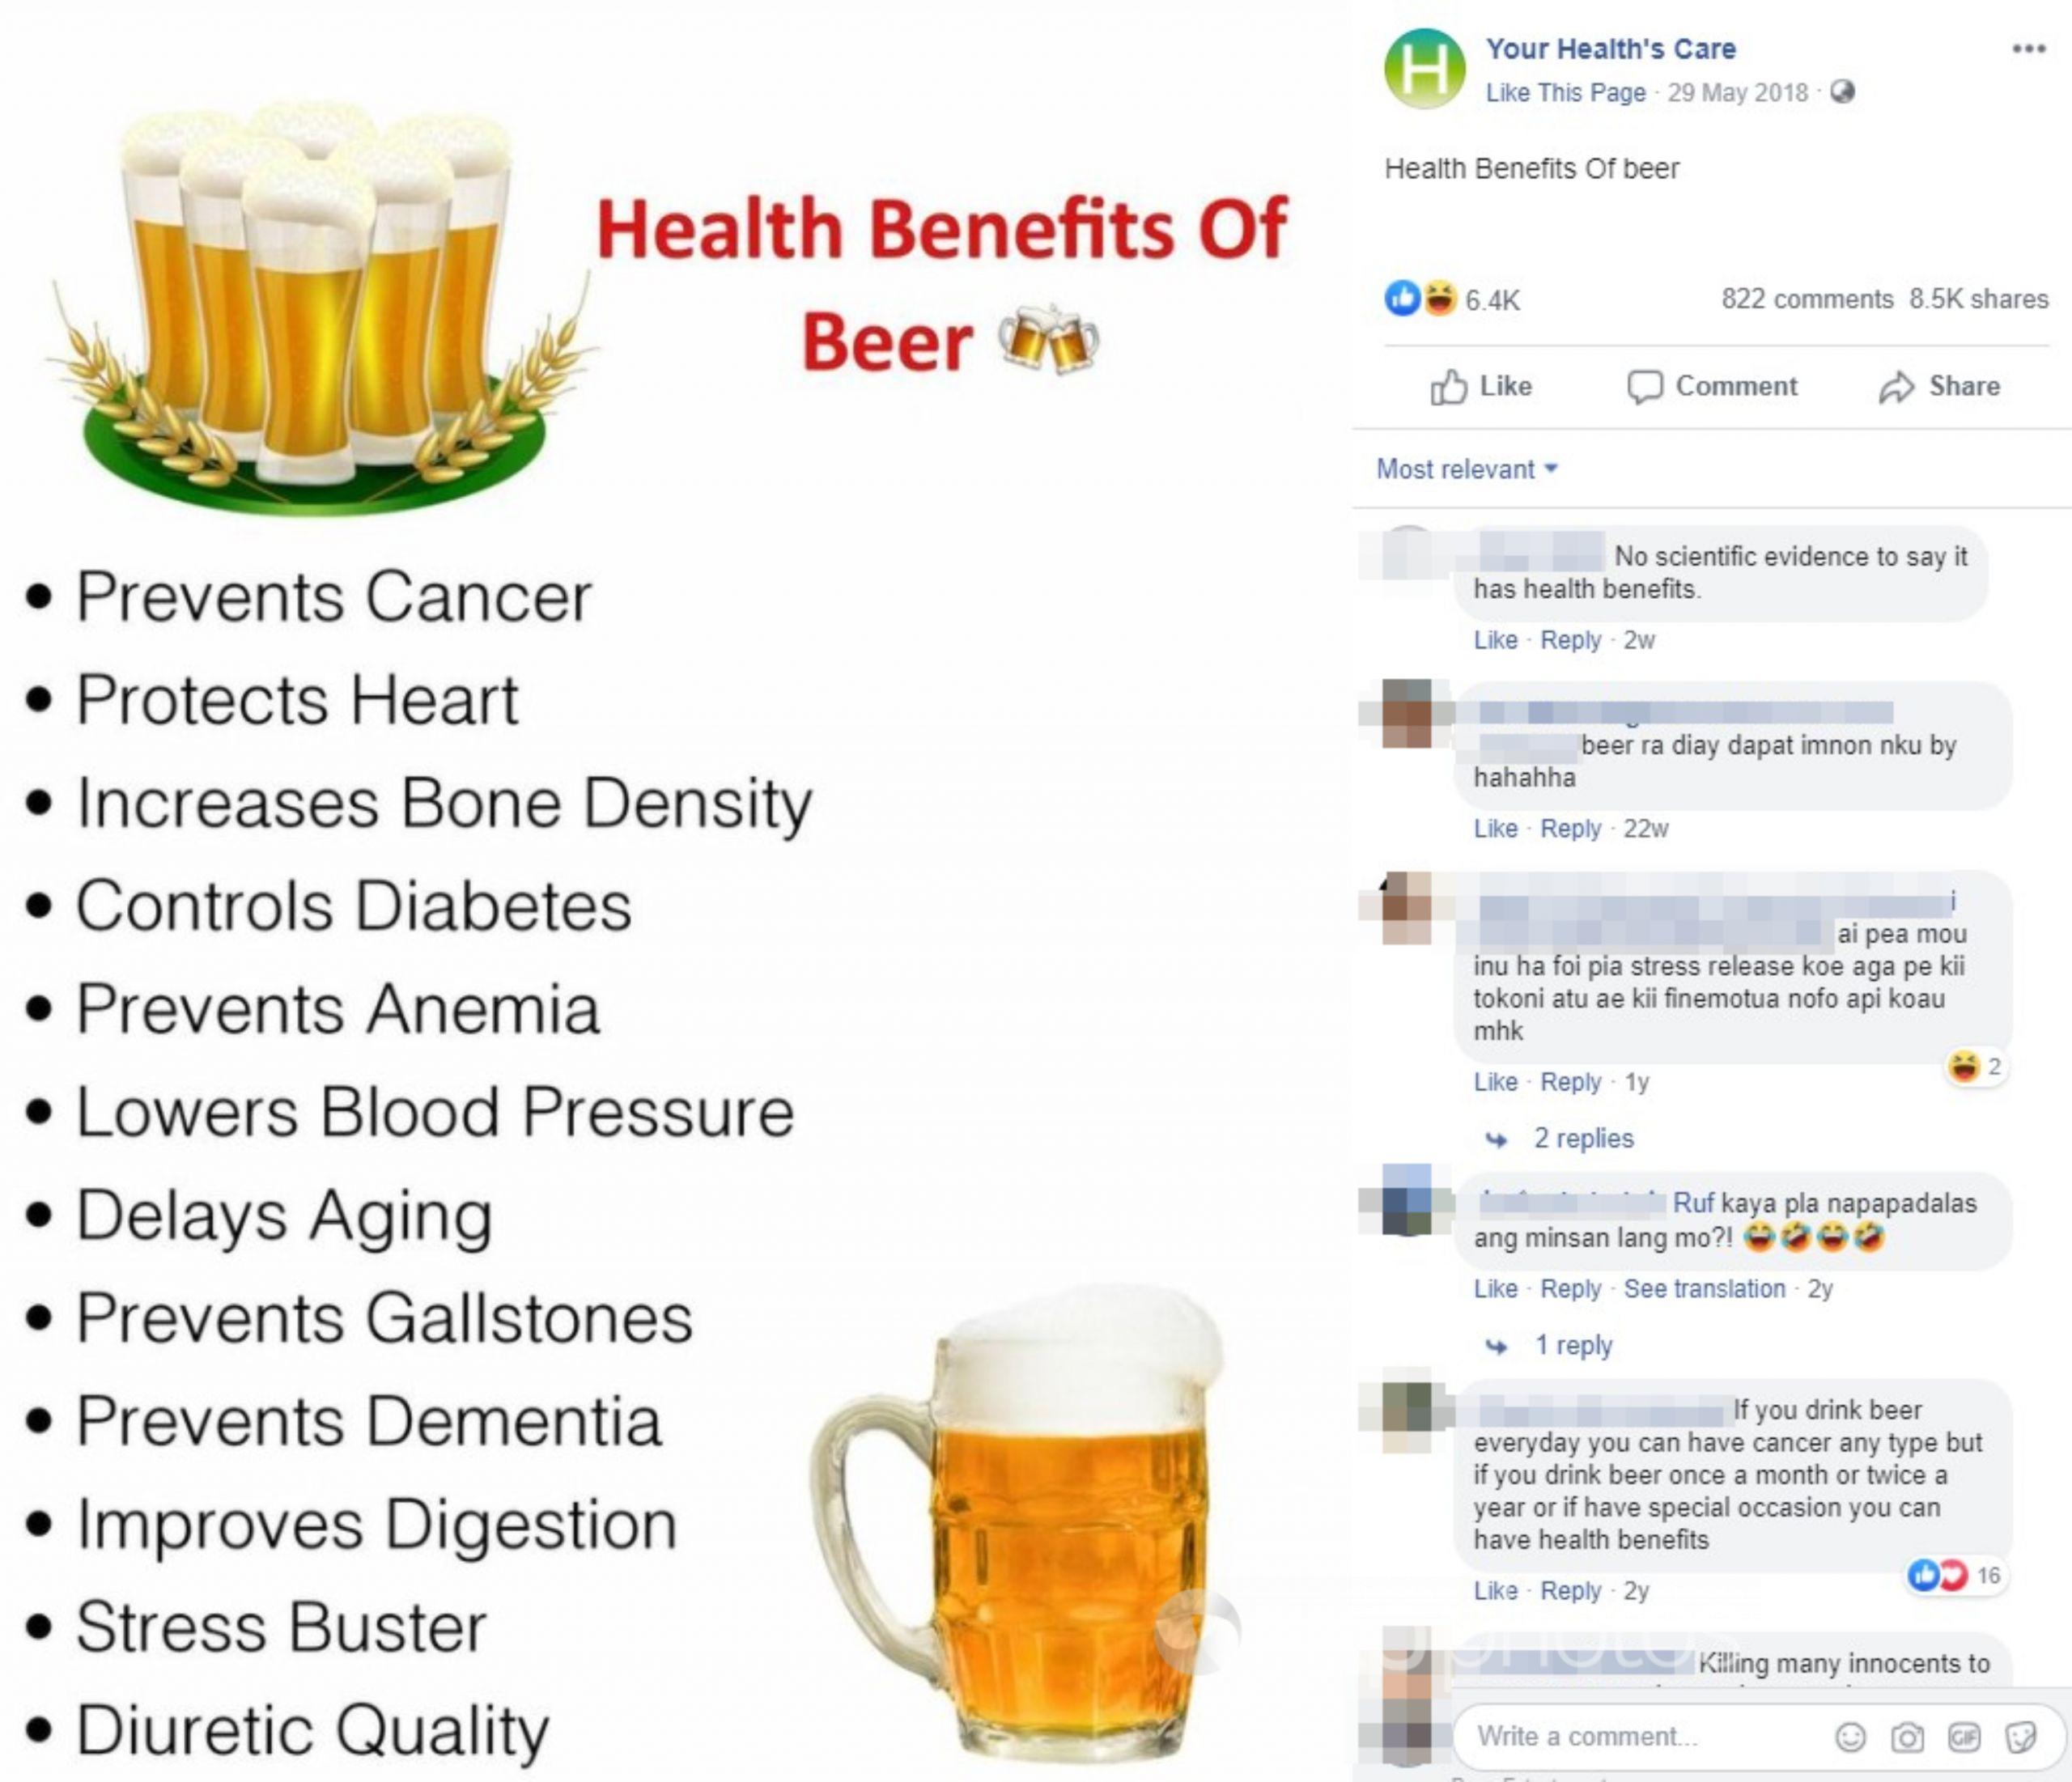 Types of beers